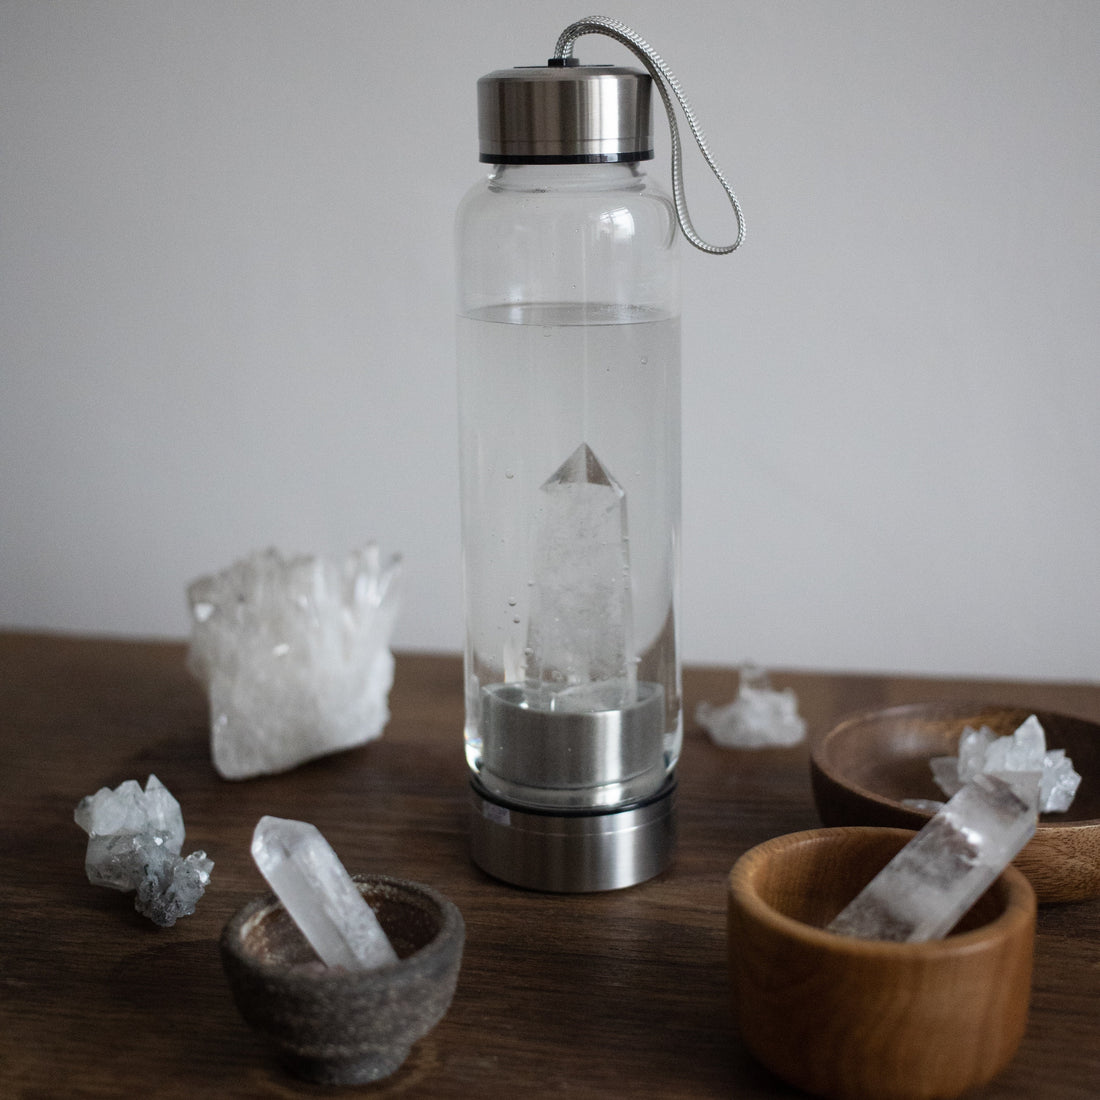 Healing crystal elixir crystals in water bottle